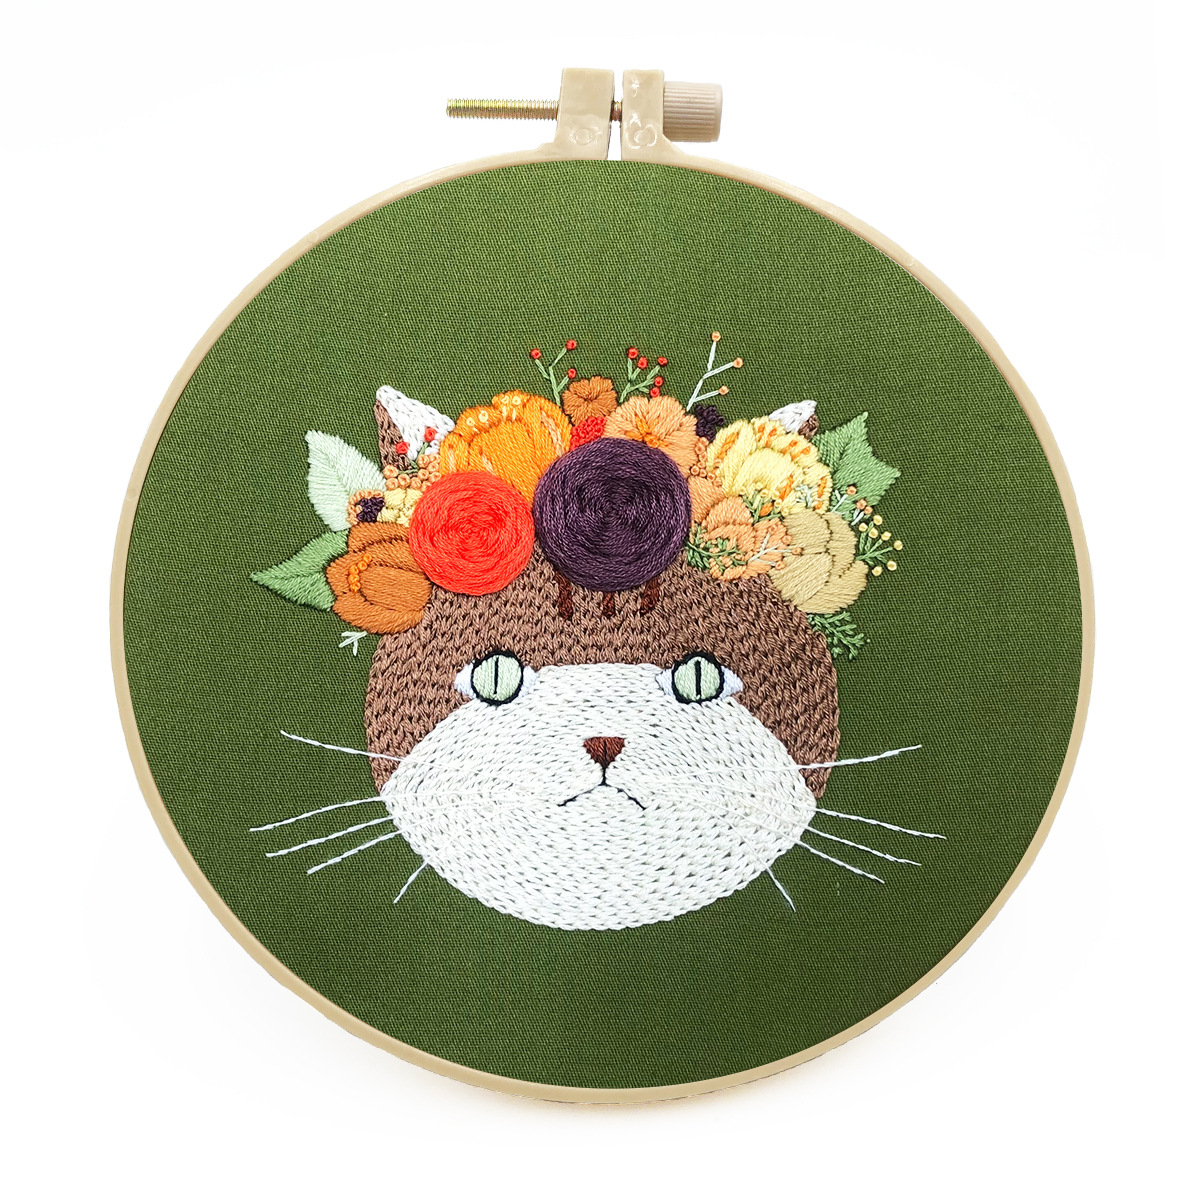 1set Cute Black Cat Embroidery Kit, Cross Stitch Kits For